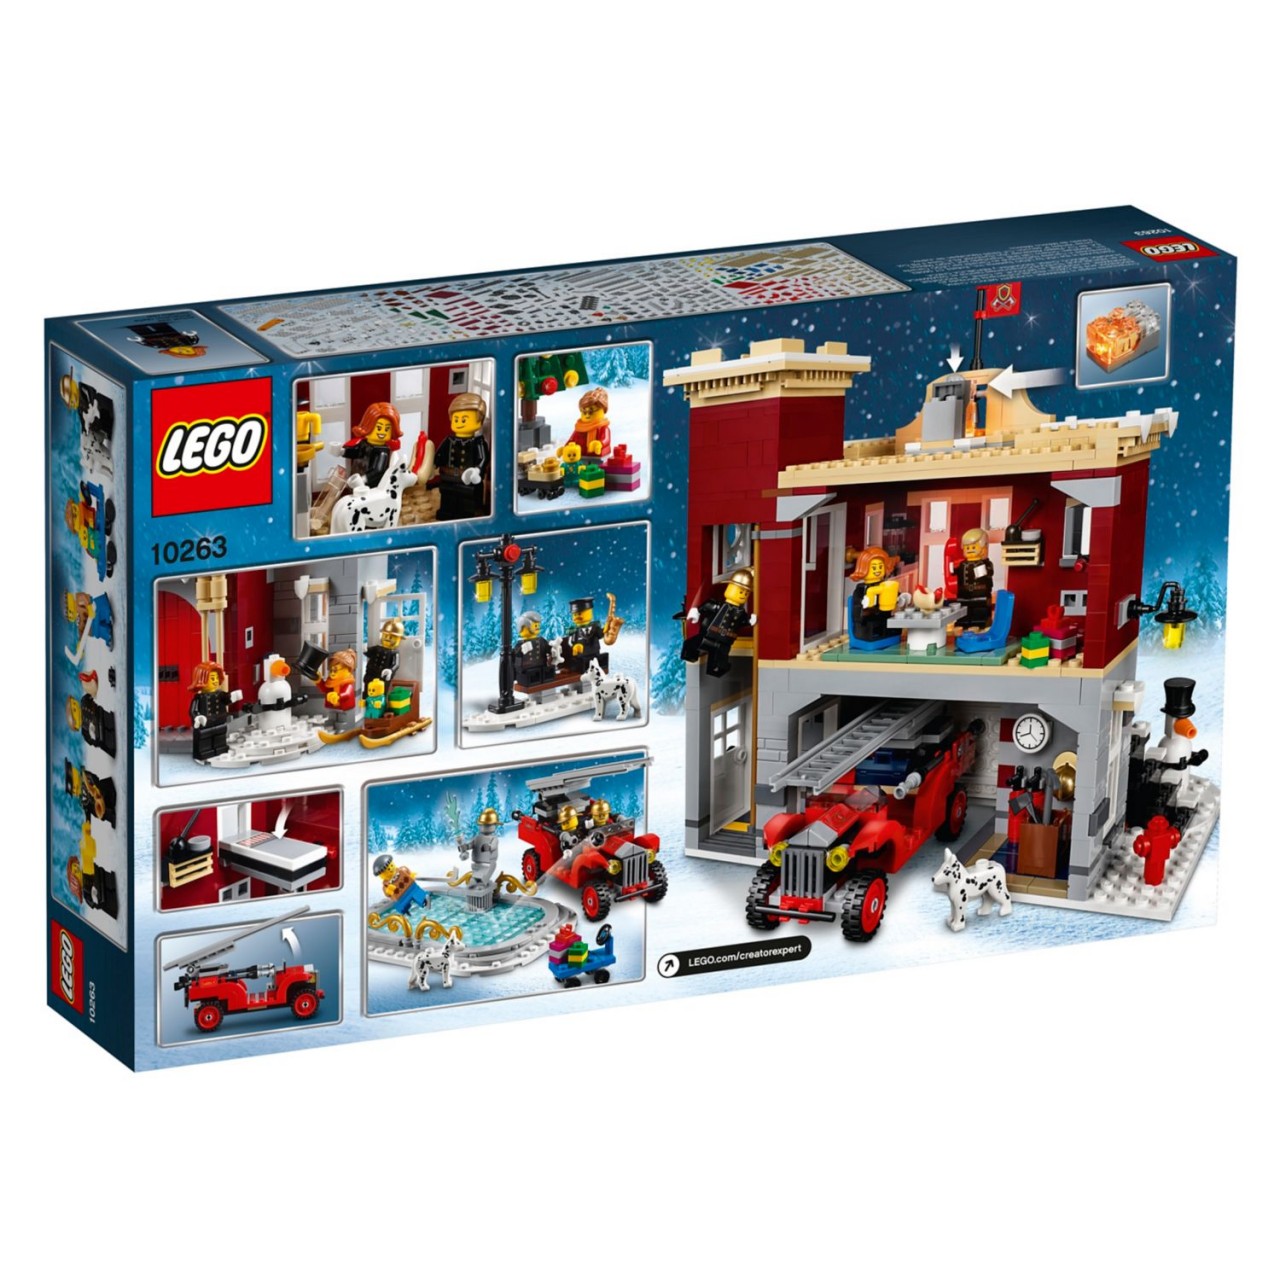 LEGO CREATOR 10263 Winter Village Fire Station